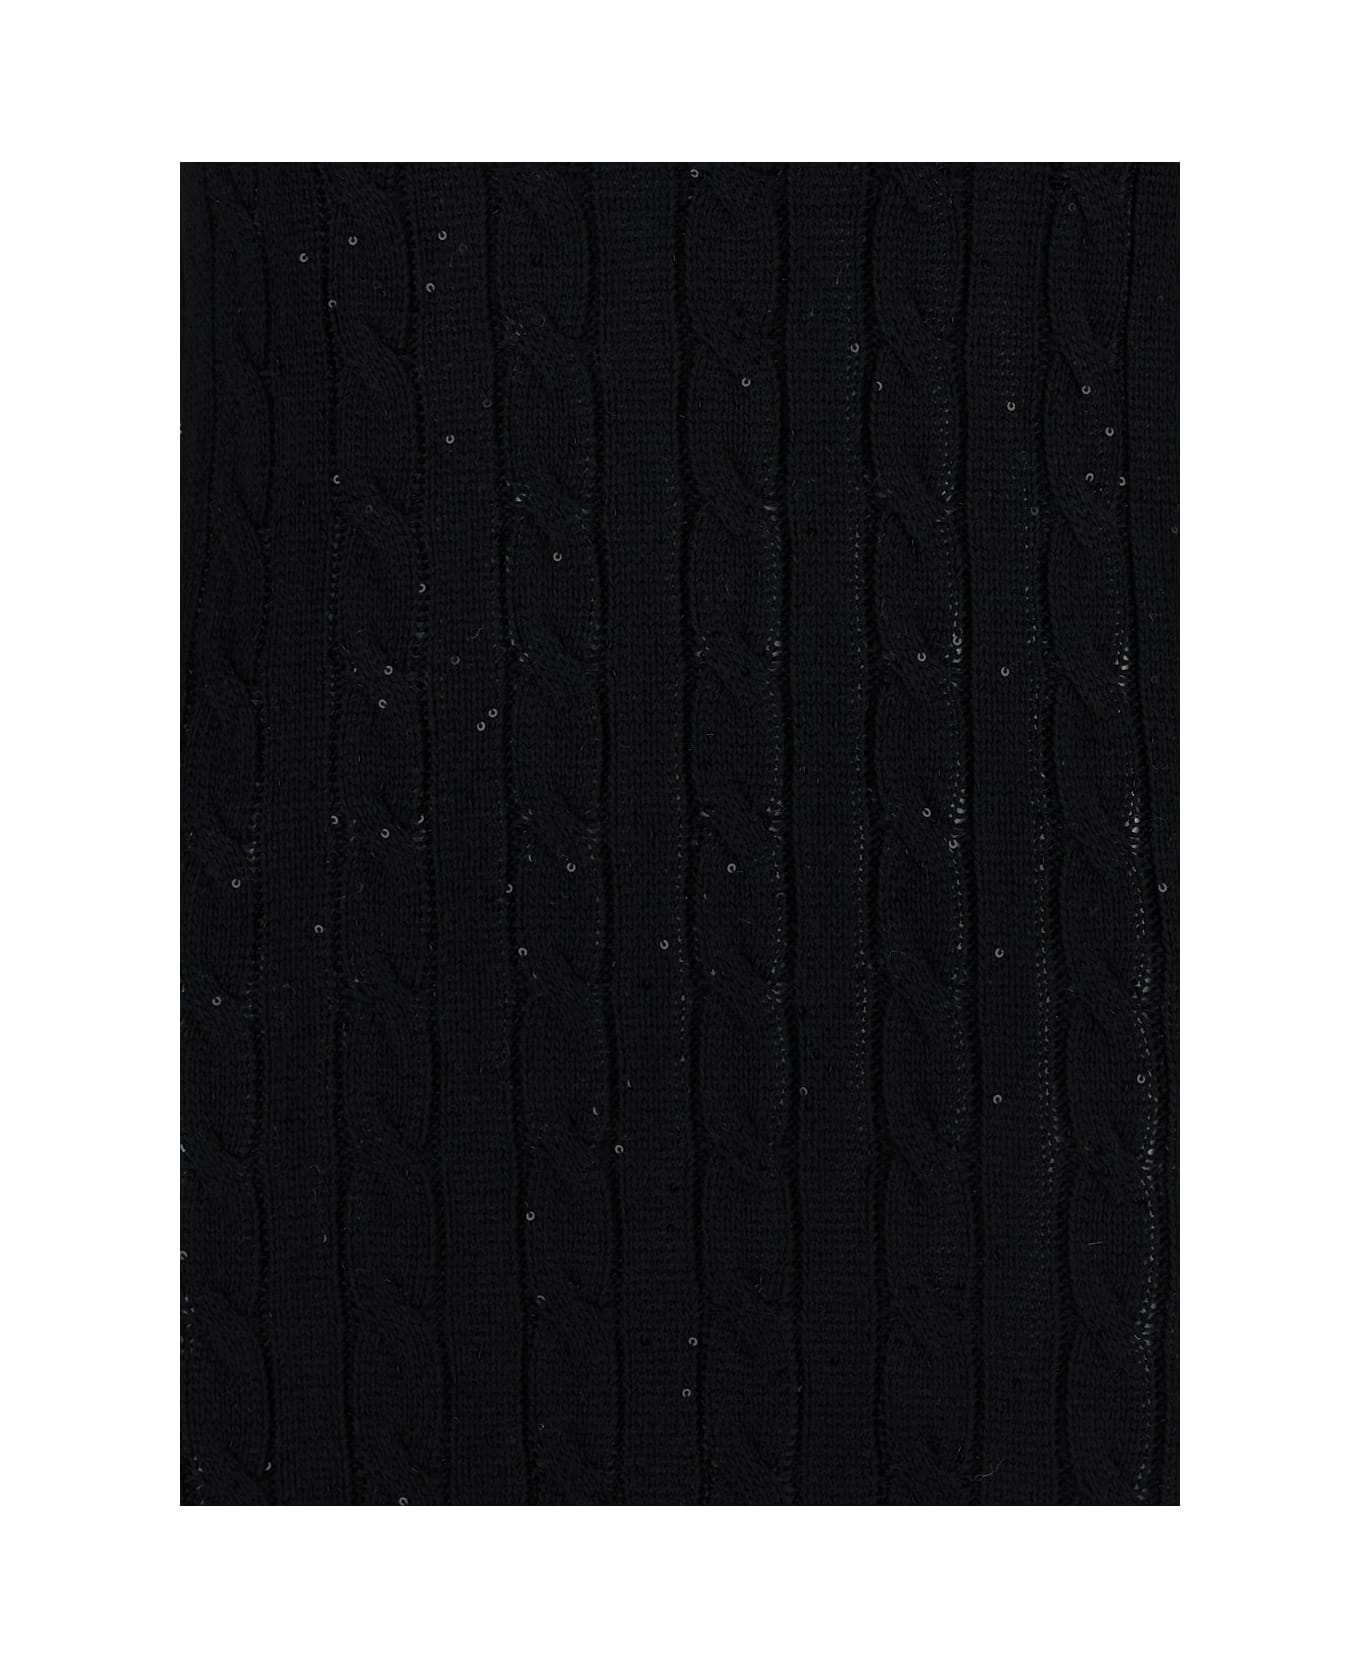 Brunello Cucinelli Sequin Embellished Cable Knit Dress - Black